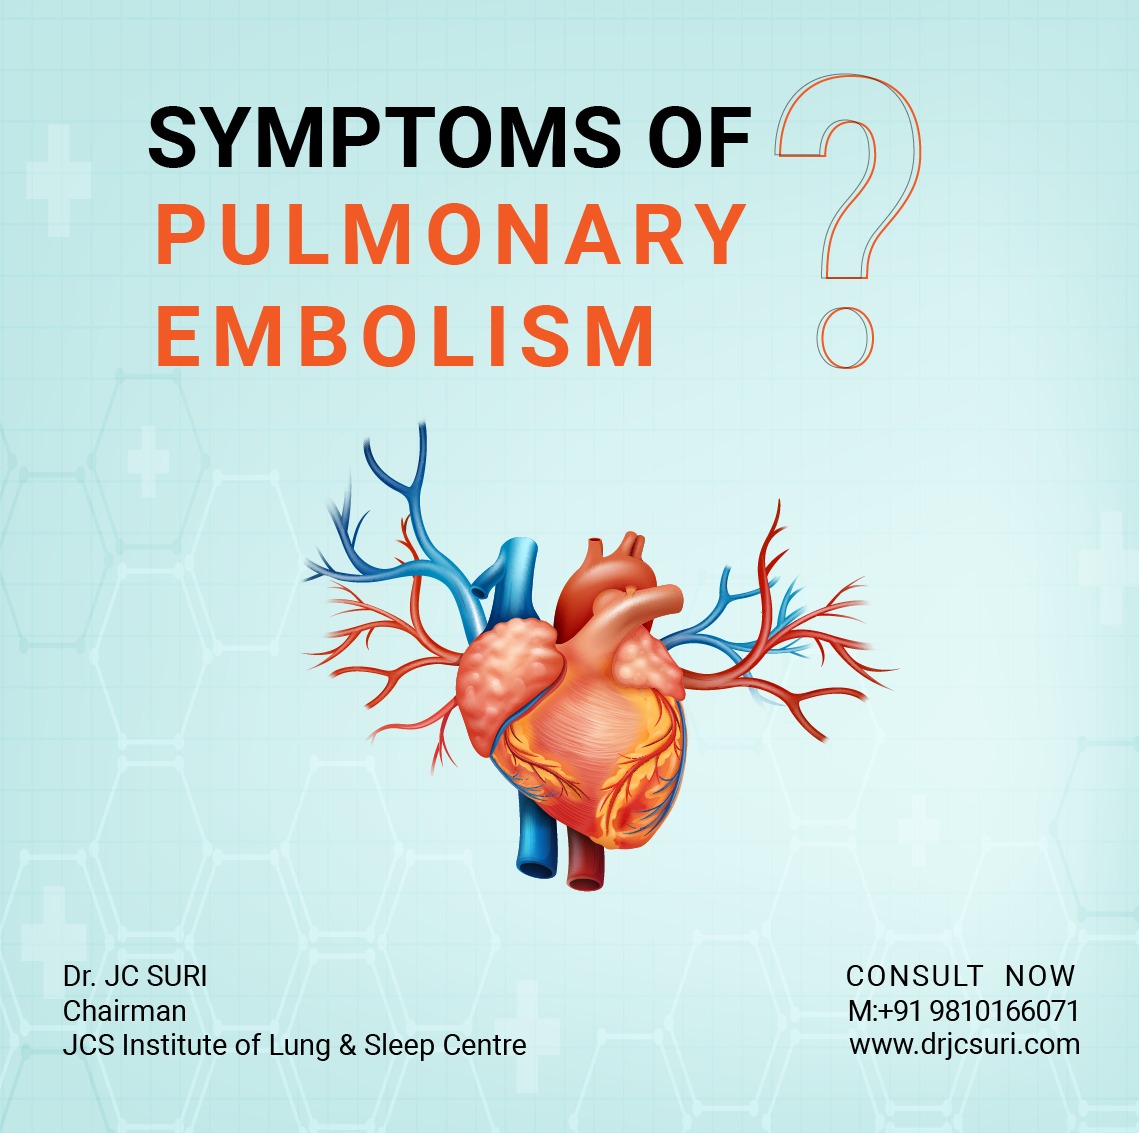  what is Pulmonary embolism